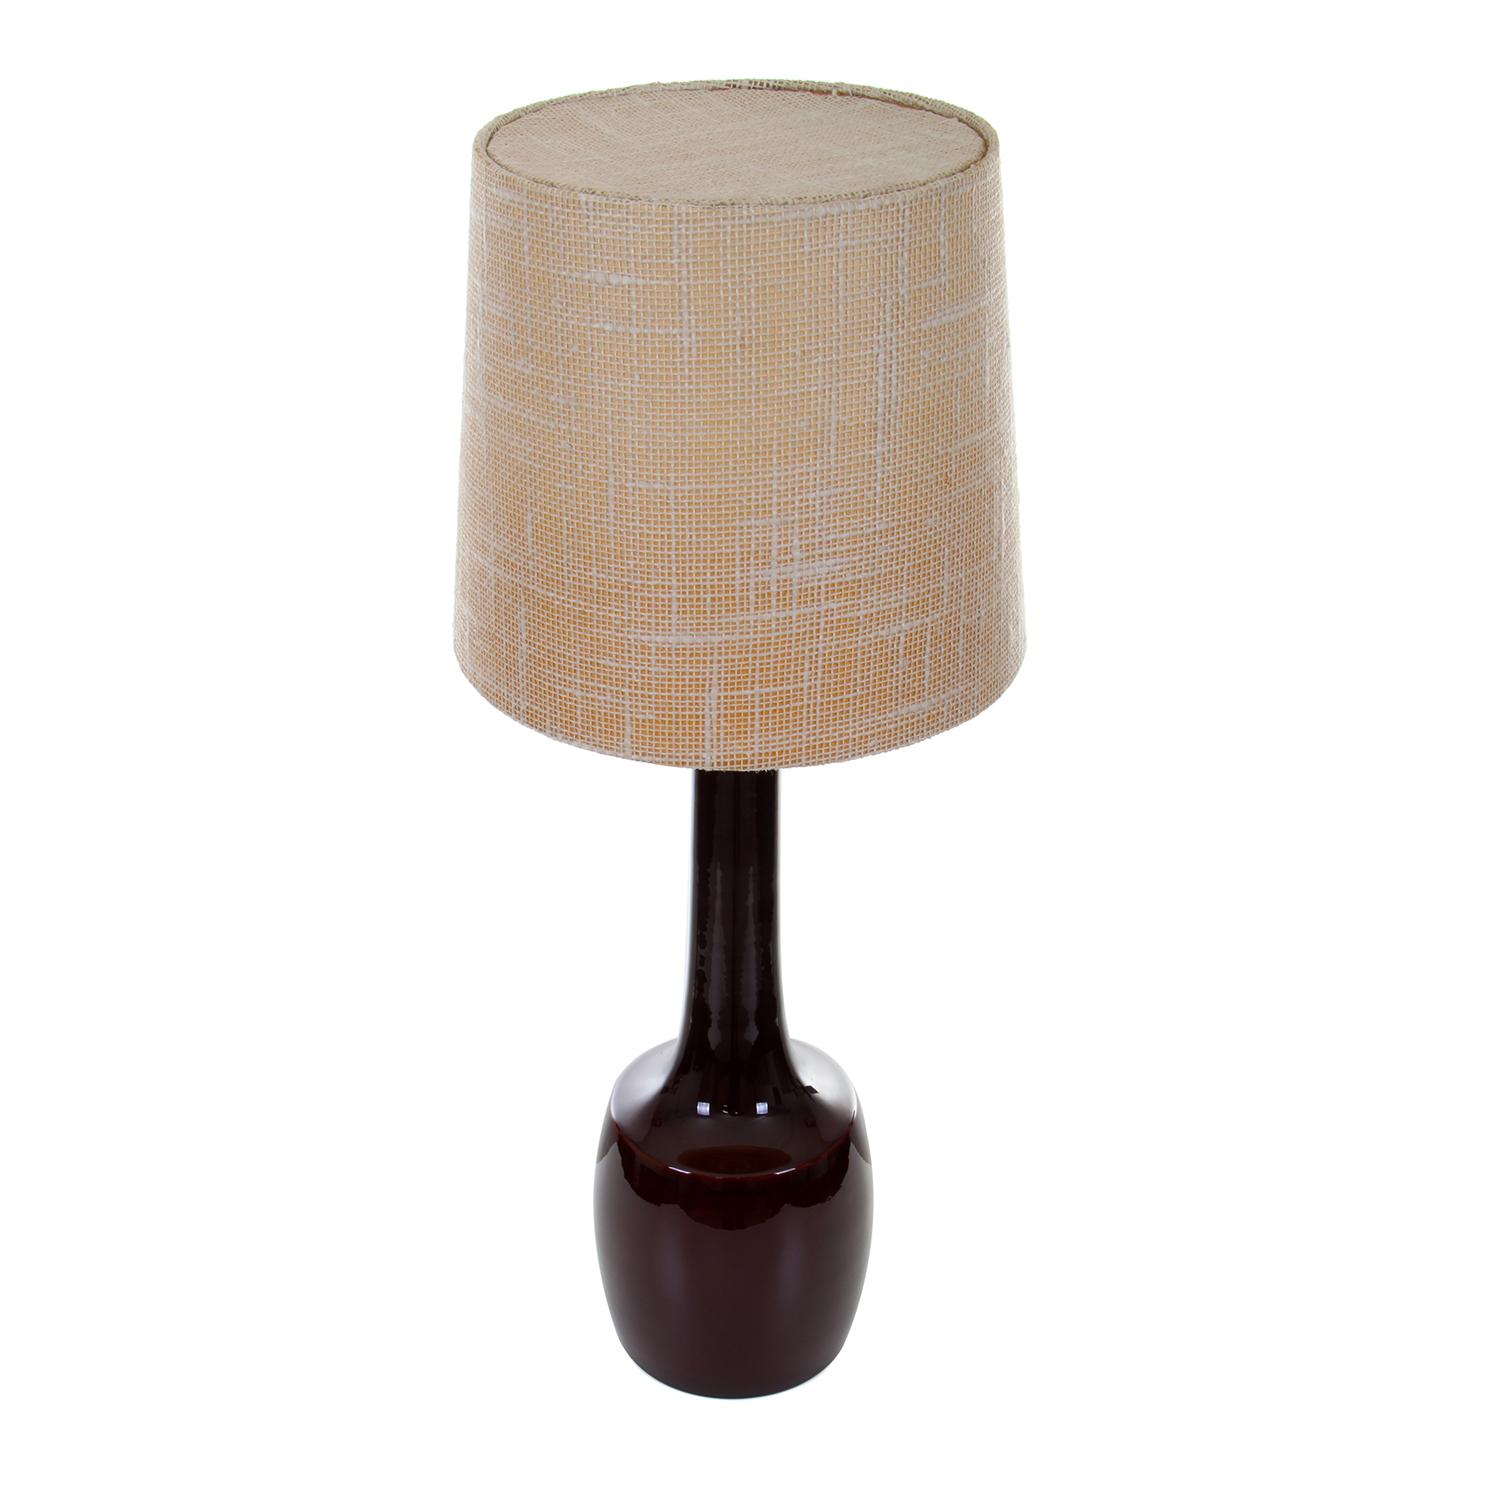 Mid-Century Modern Tall Table Light by Knabstrup Keramik 1960s, Burgundy Ceramic Lamp with Shade